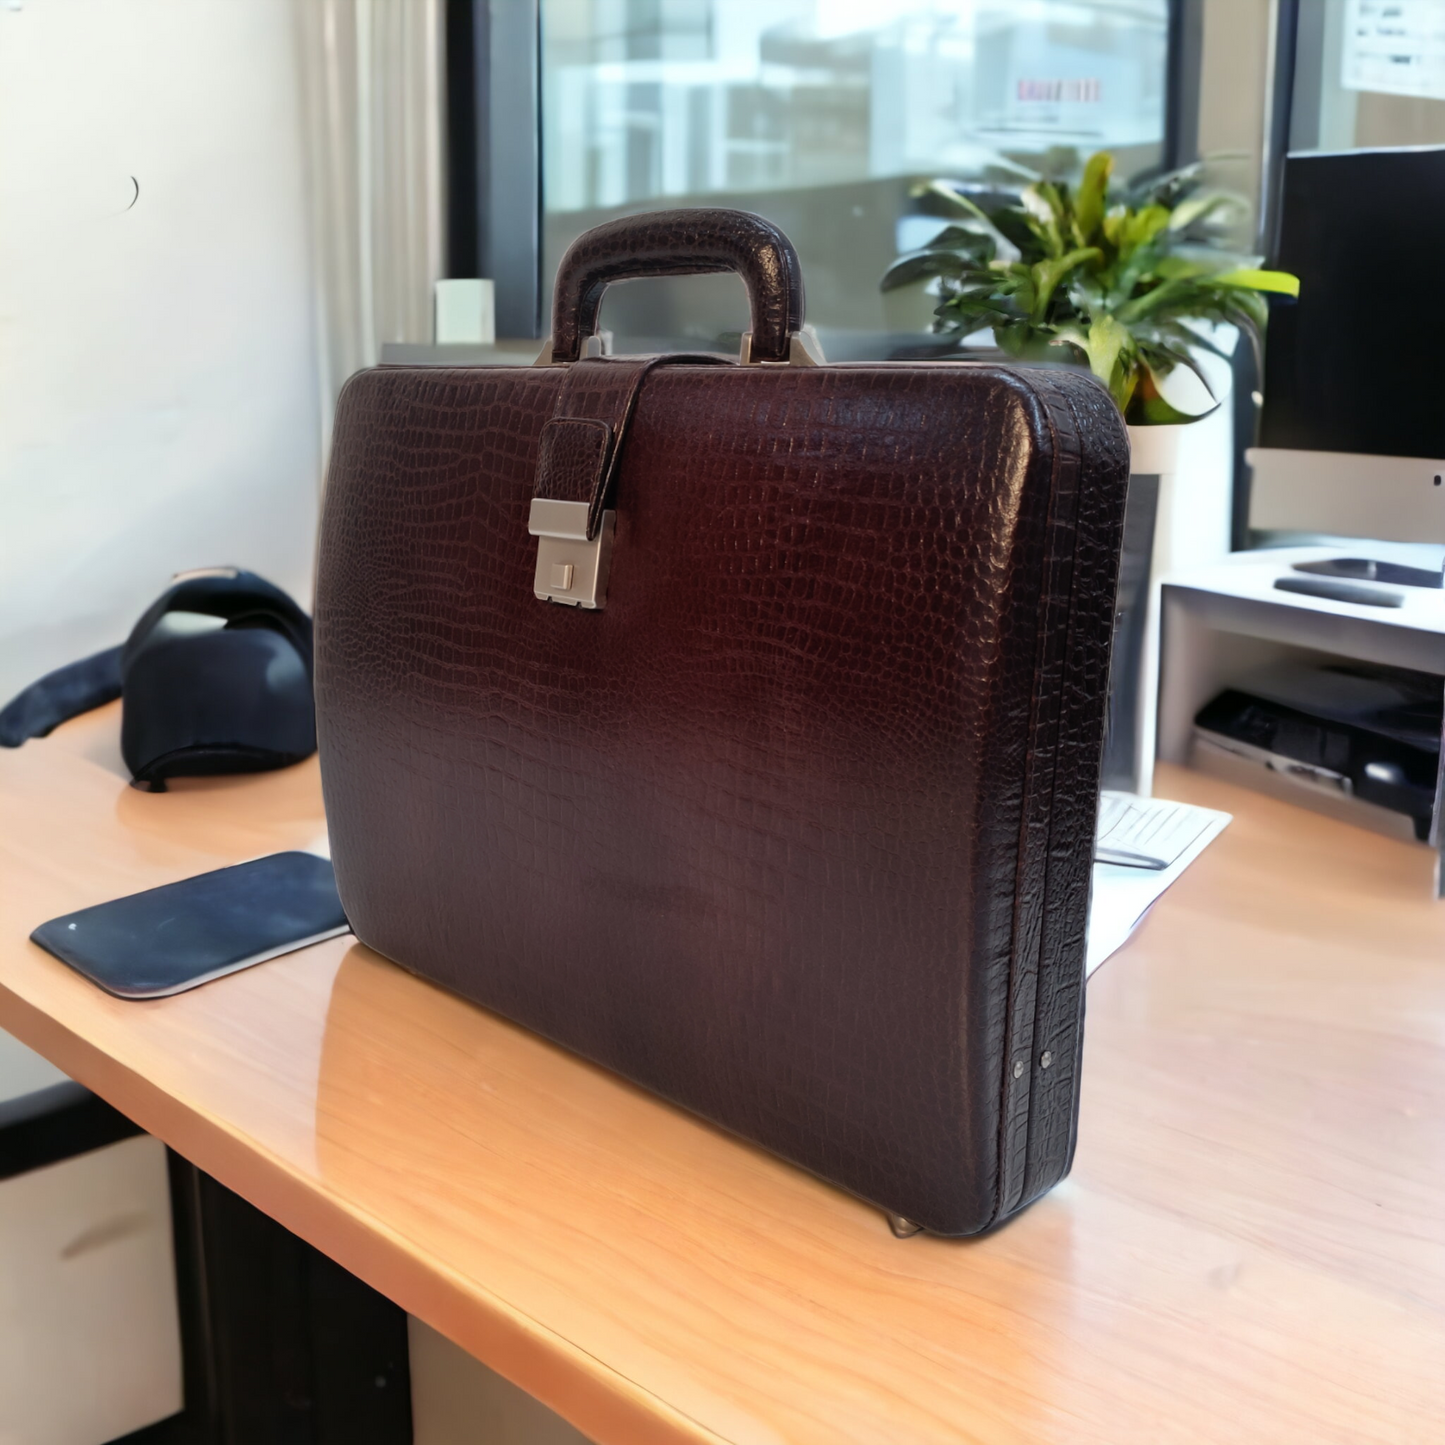 Leather Briefcase, Tan Leather Briefcase, Mens Leather Attache Briefcase, Laptop Bag, MacBook Bag, Leather bag, Gift for Him, Mens Briefcase